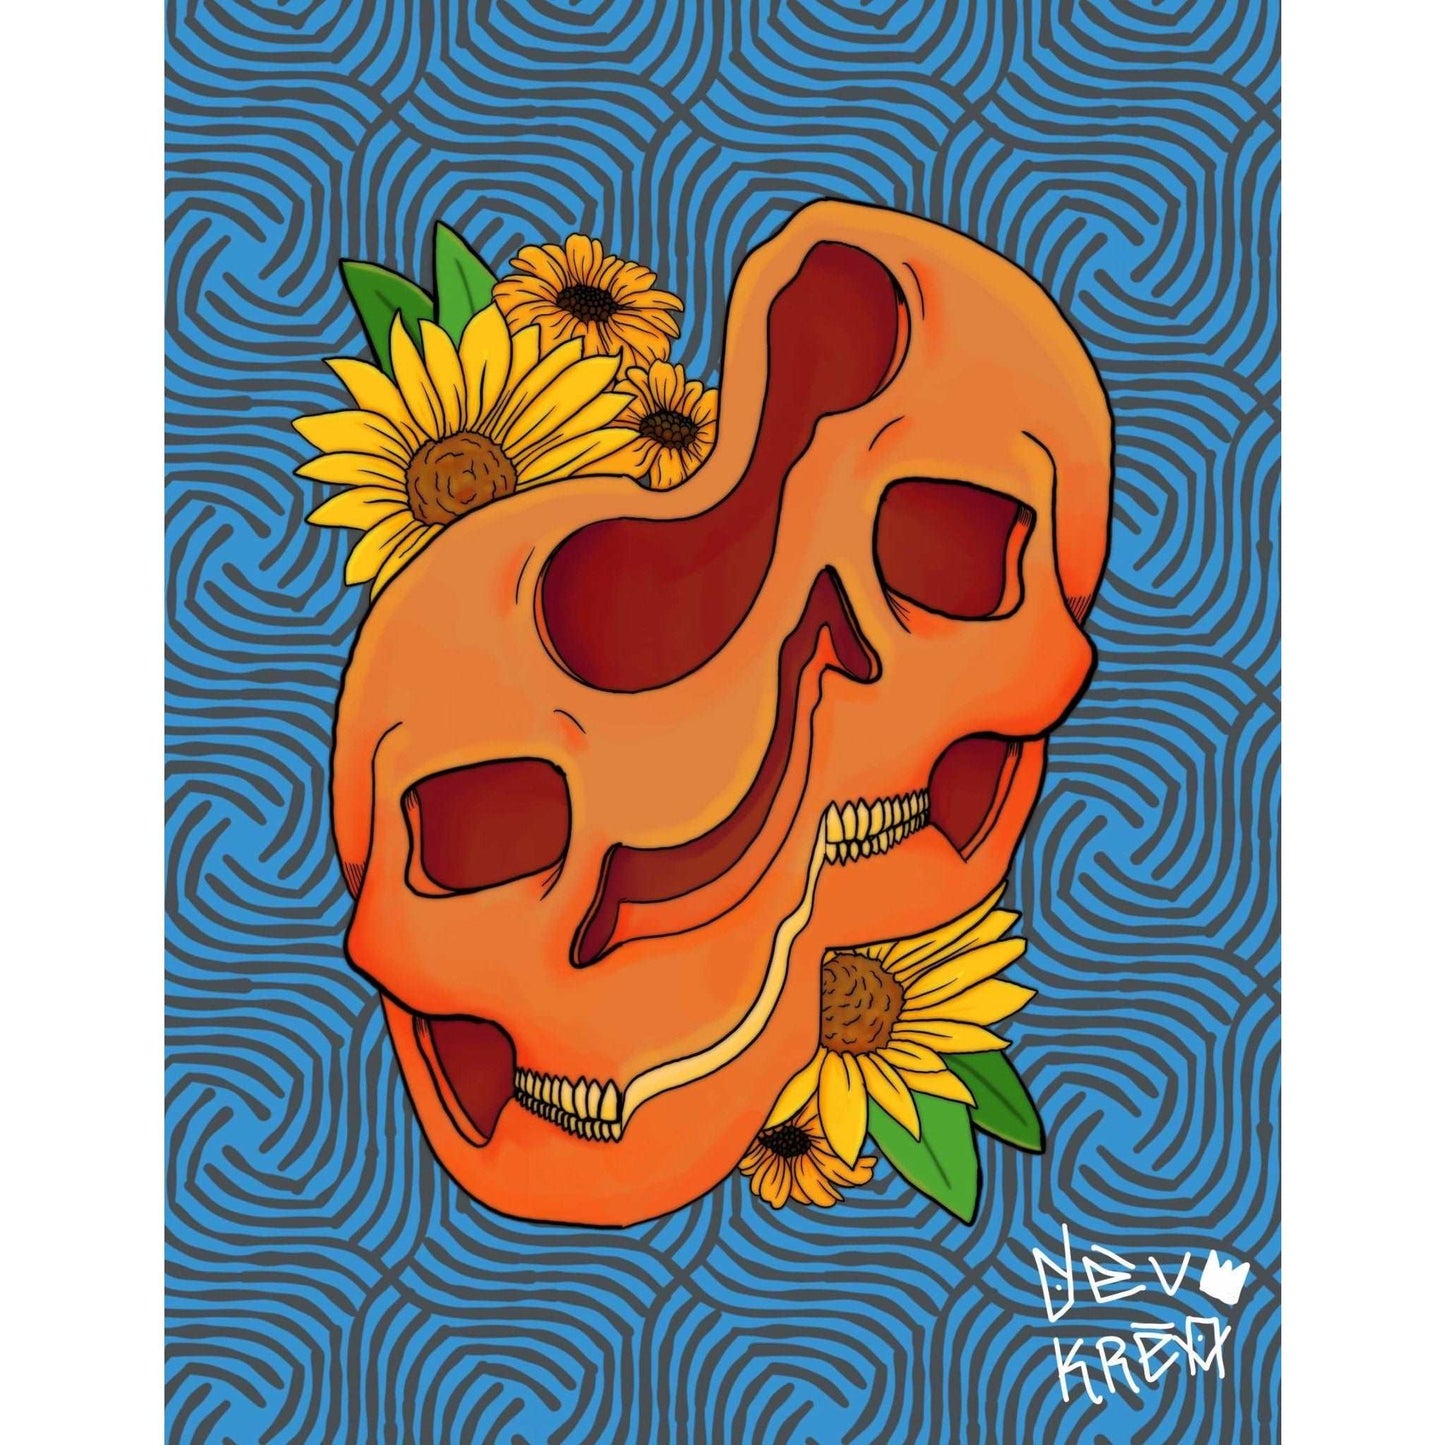 Surreal Trippy Skull Print | DevKrea - Deviantkreations